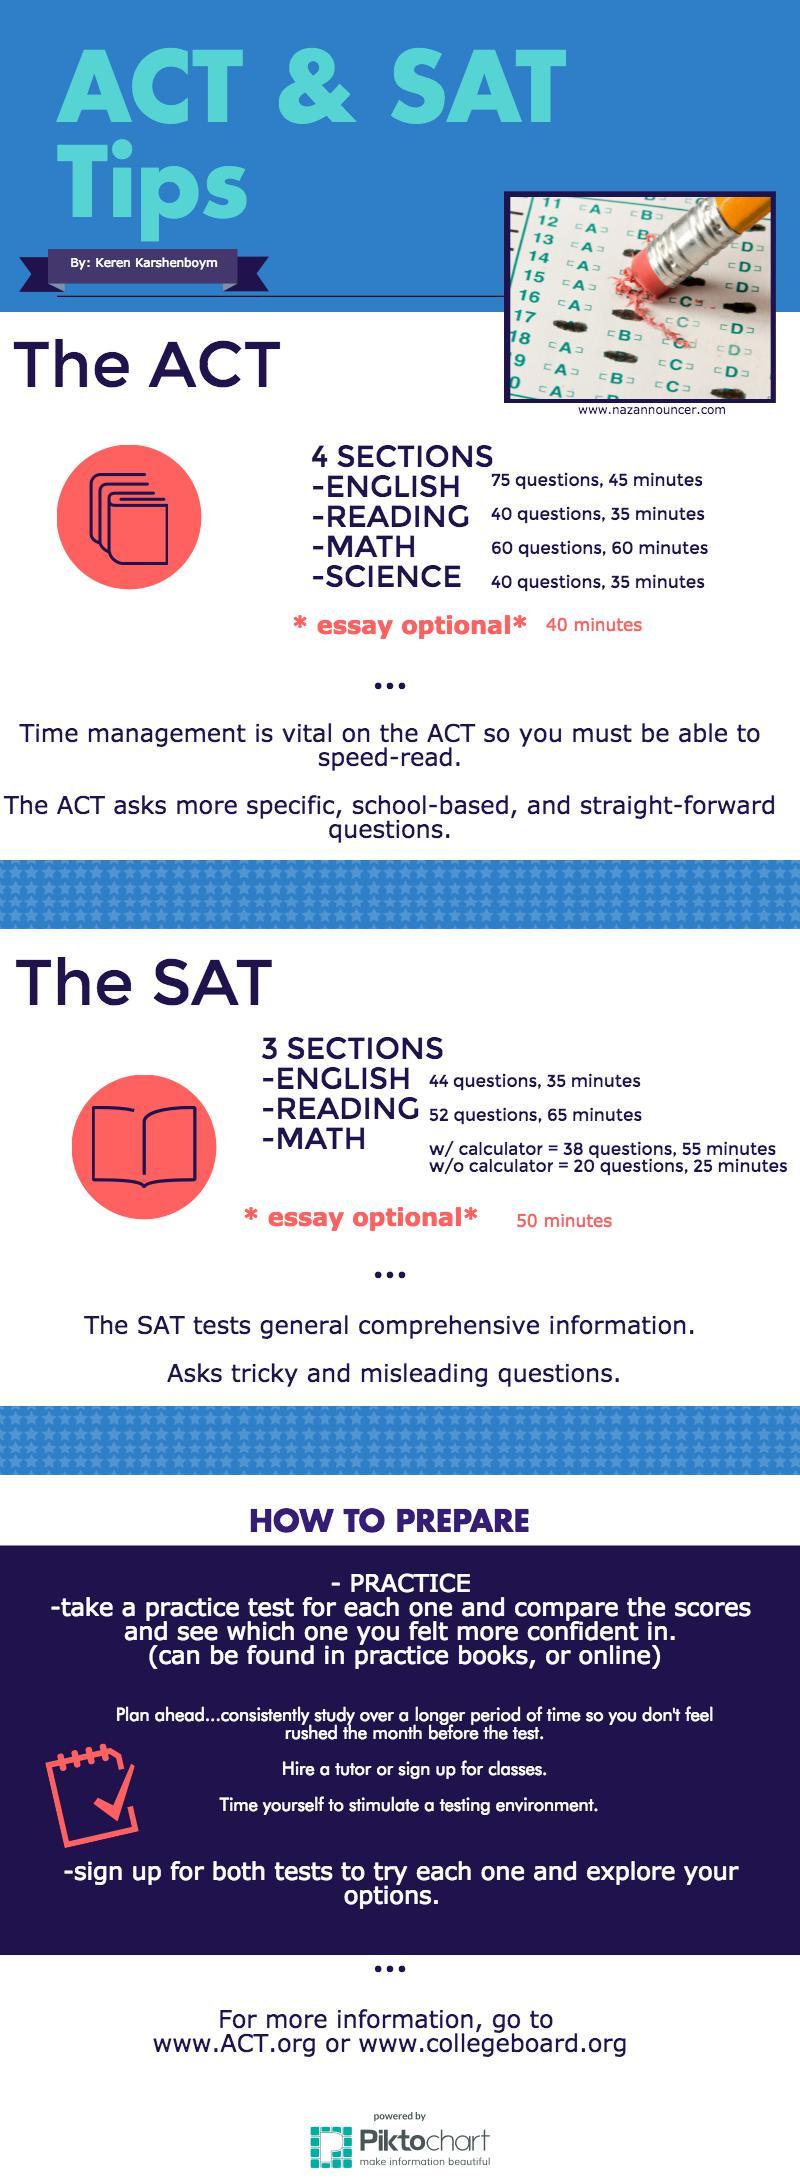 ACT & SAT Tips